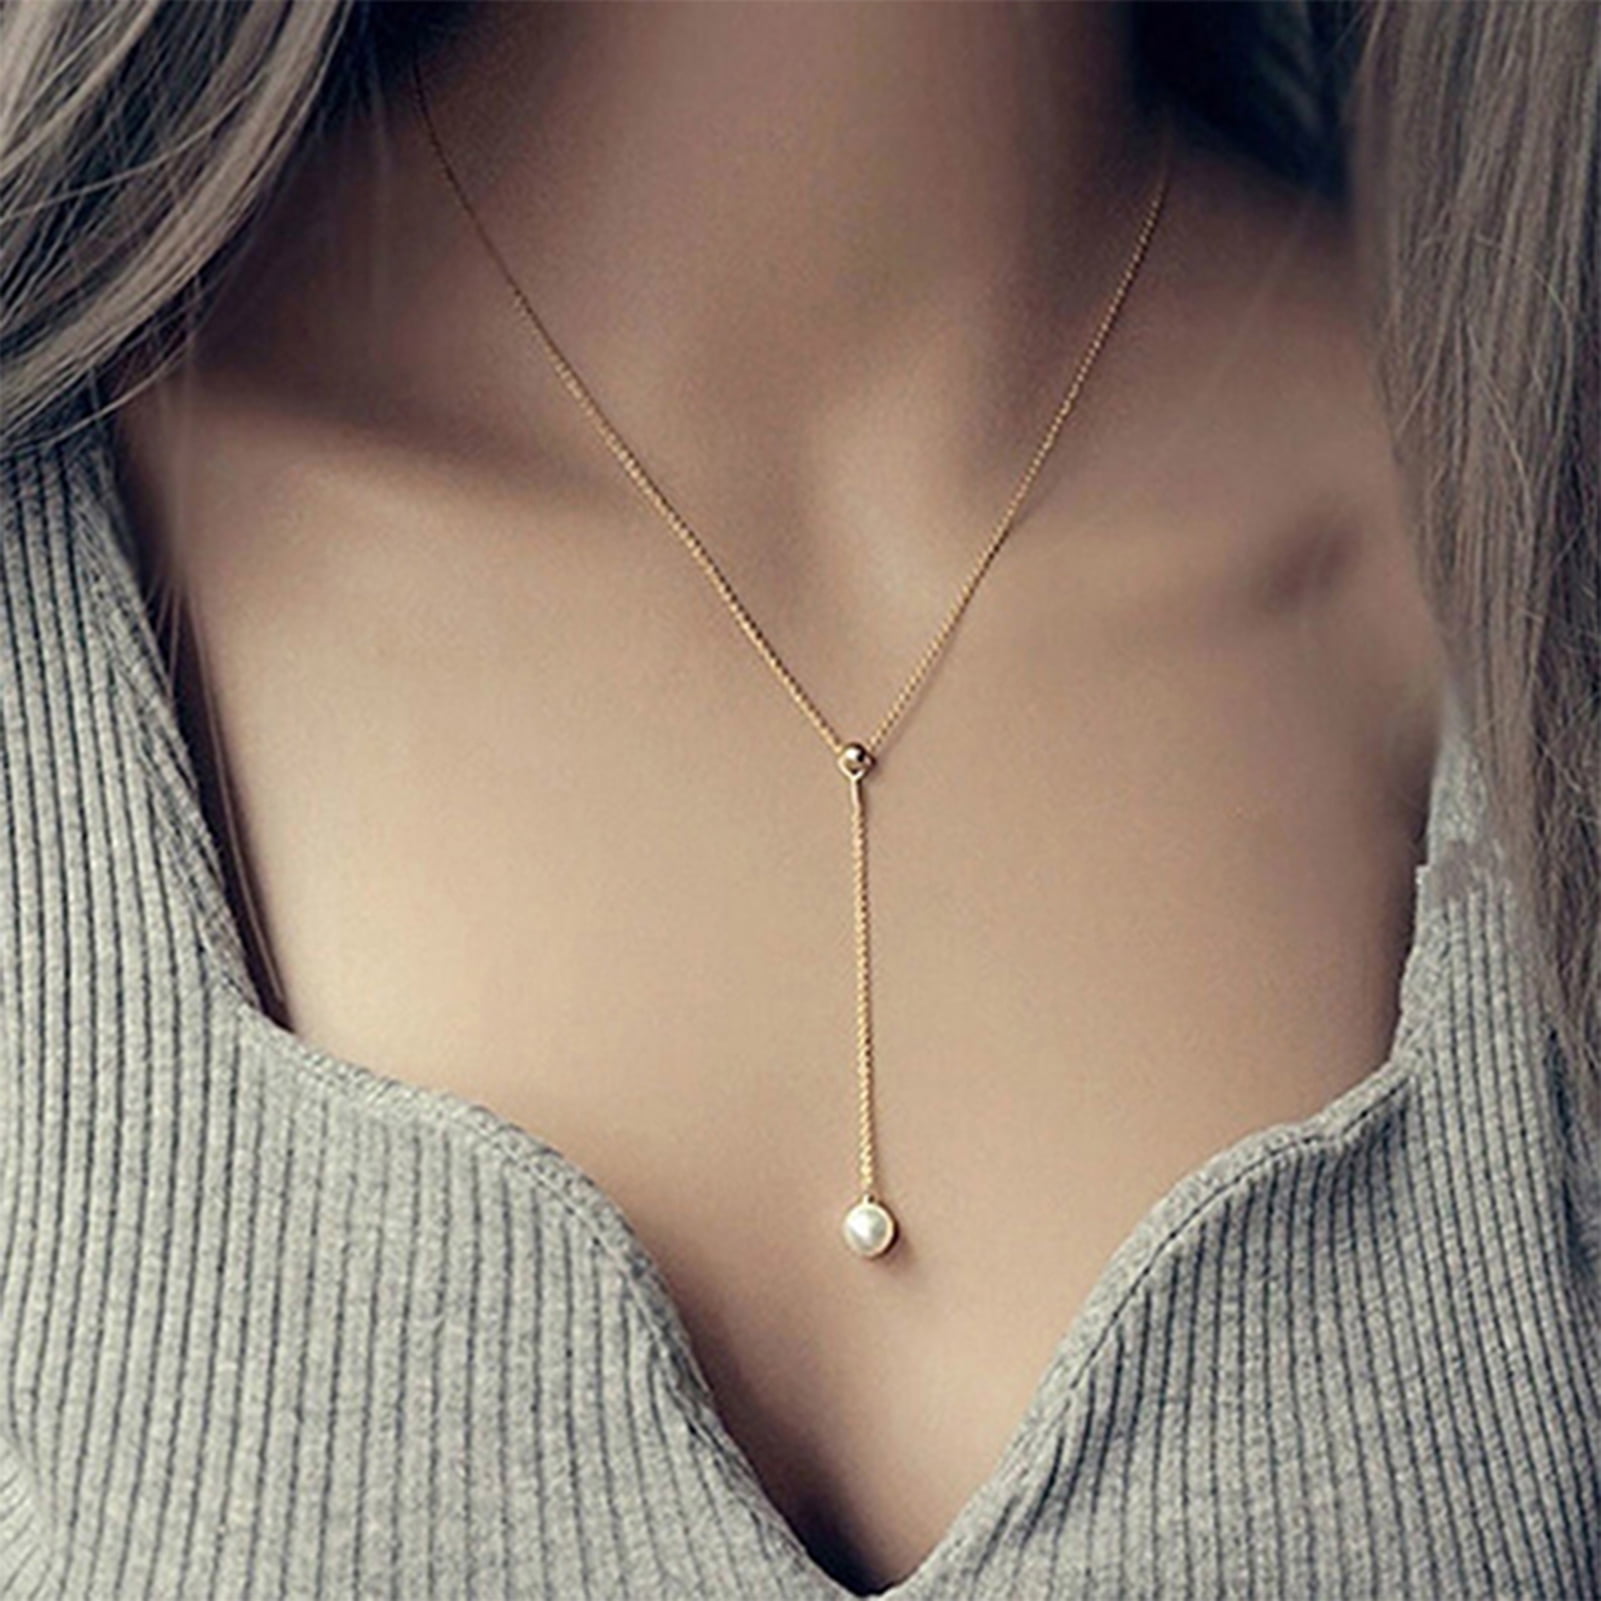 Elegant Single Pearl Choker Necklace